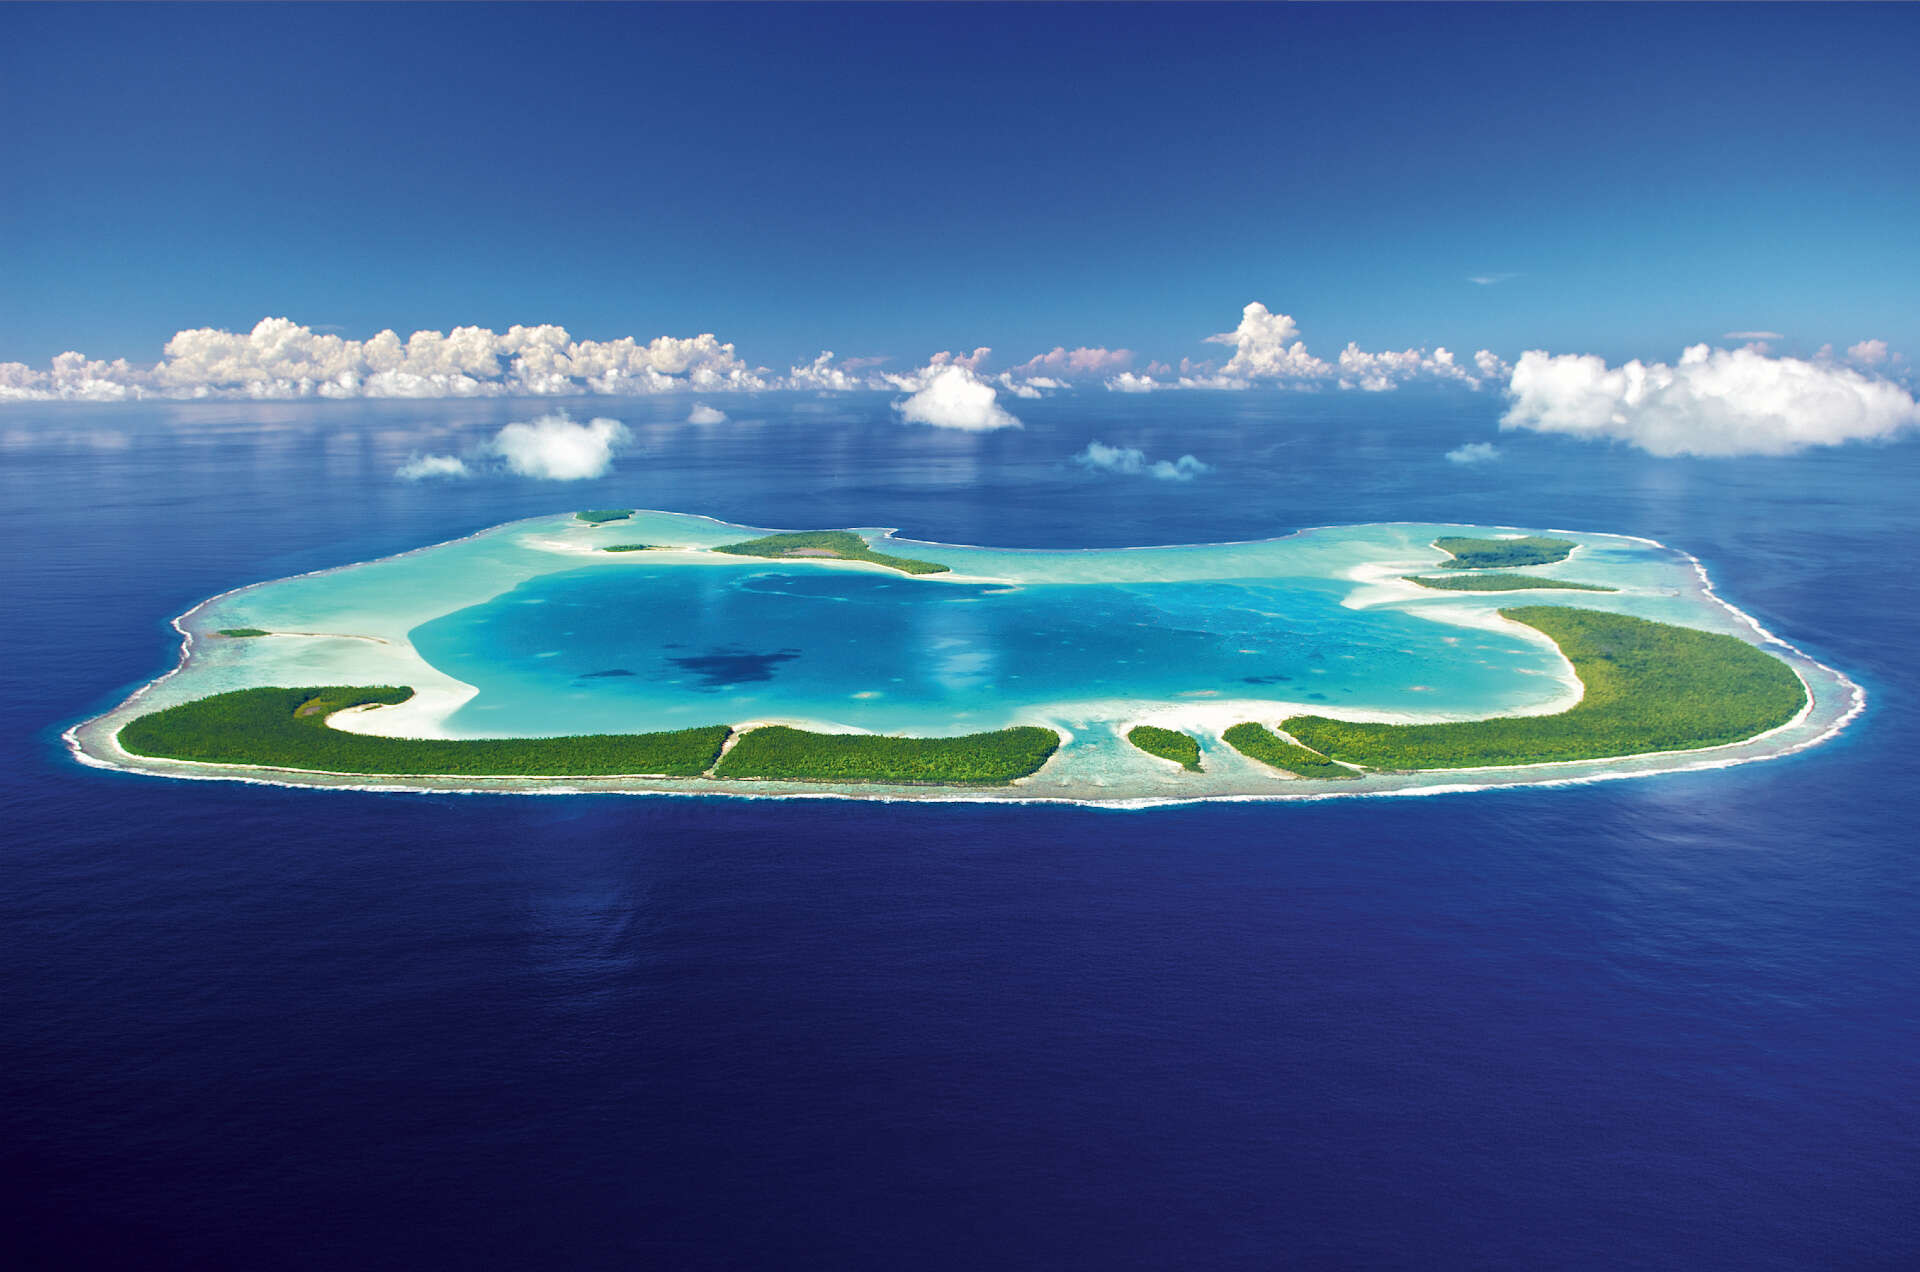 The Brando Resort - the atoll